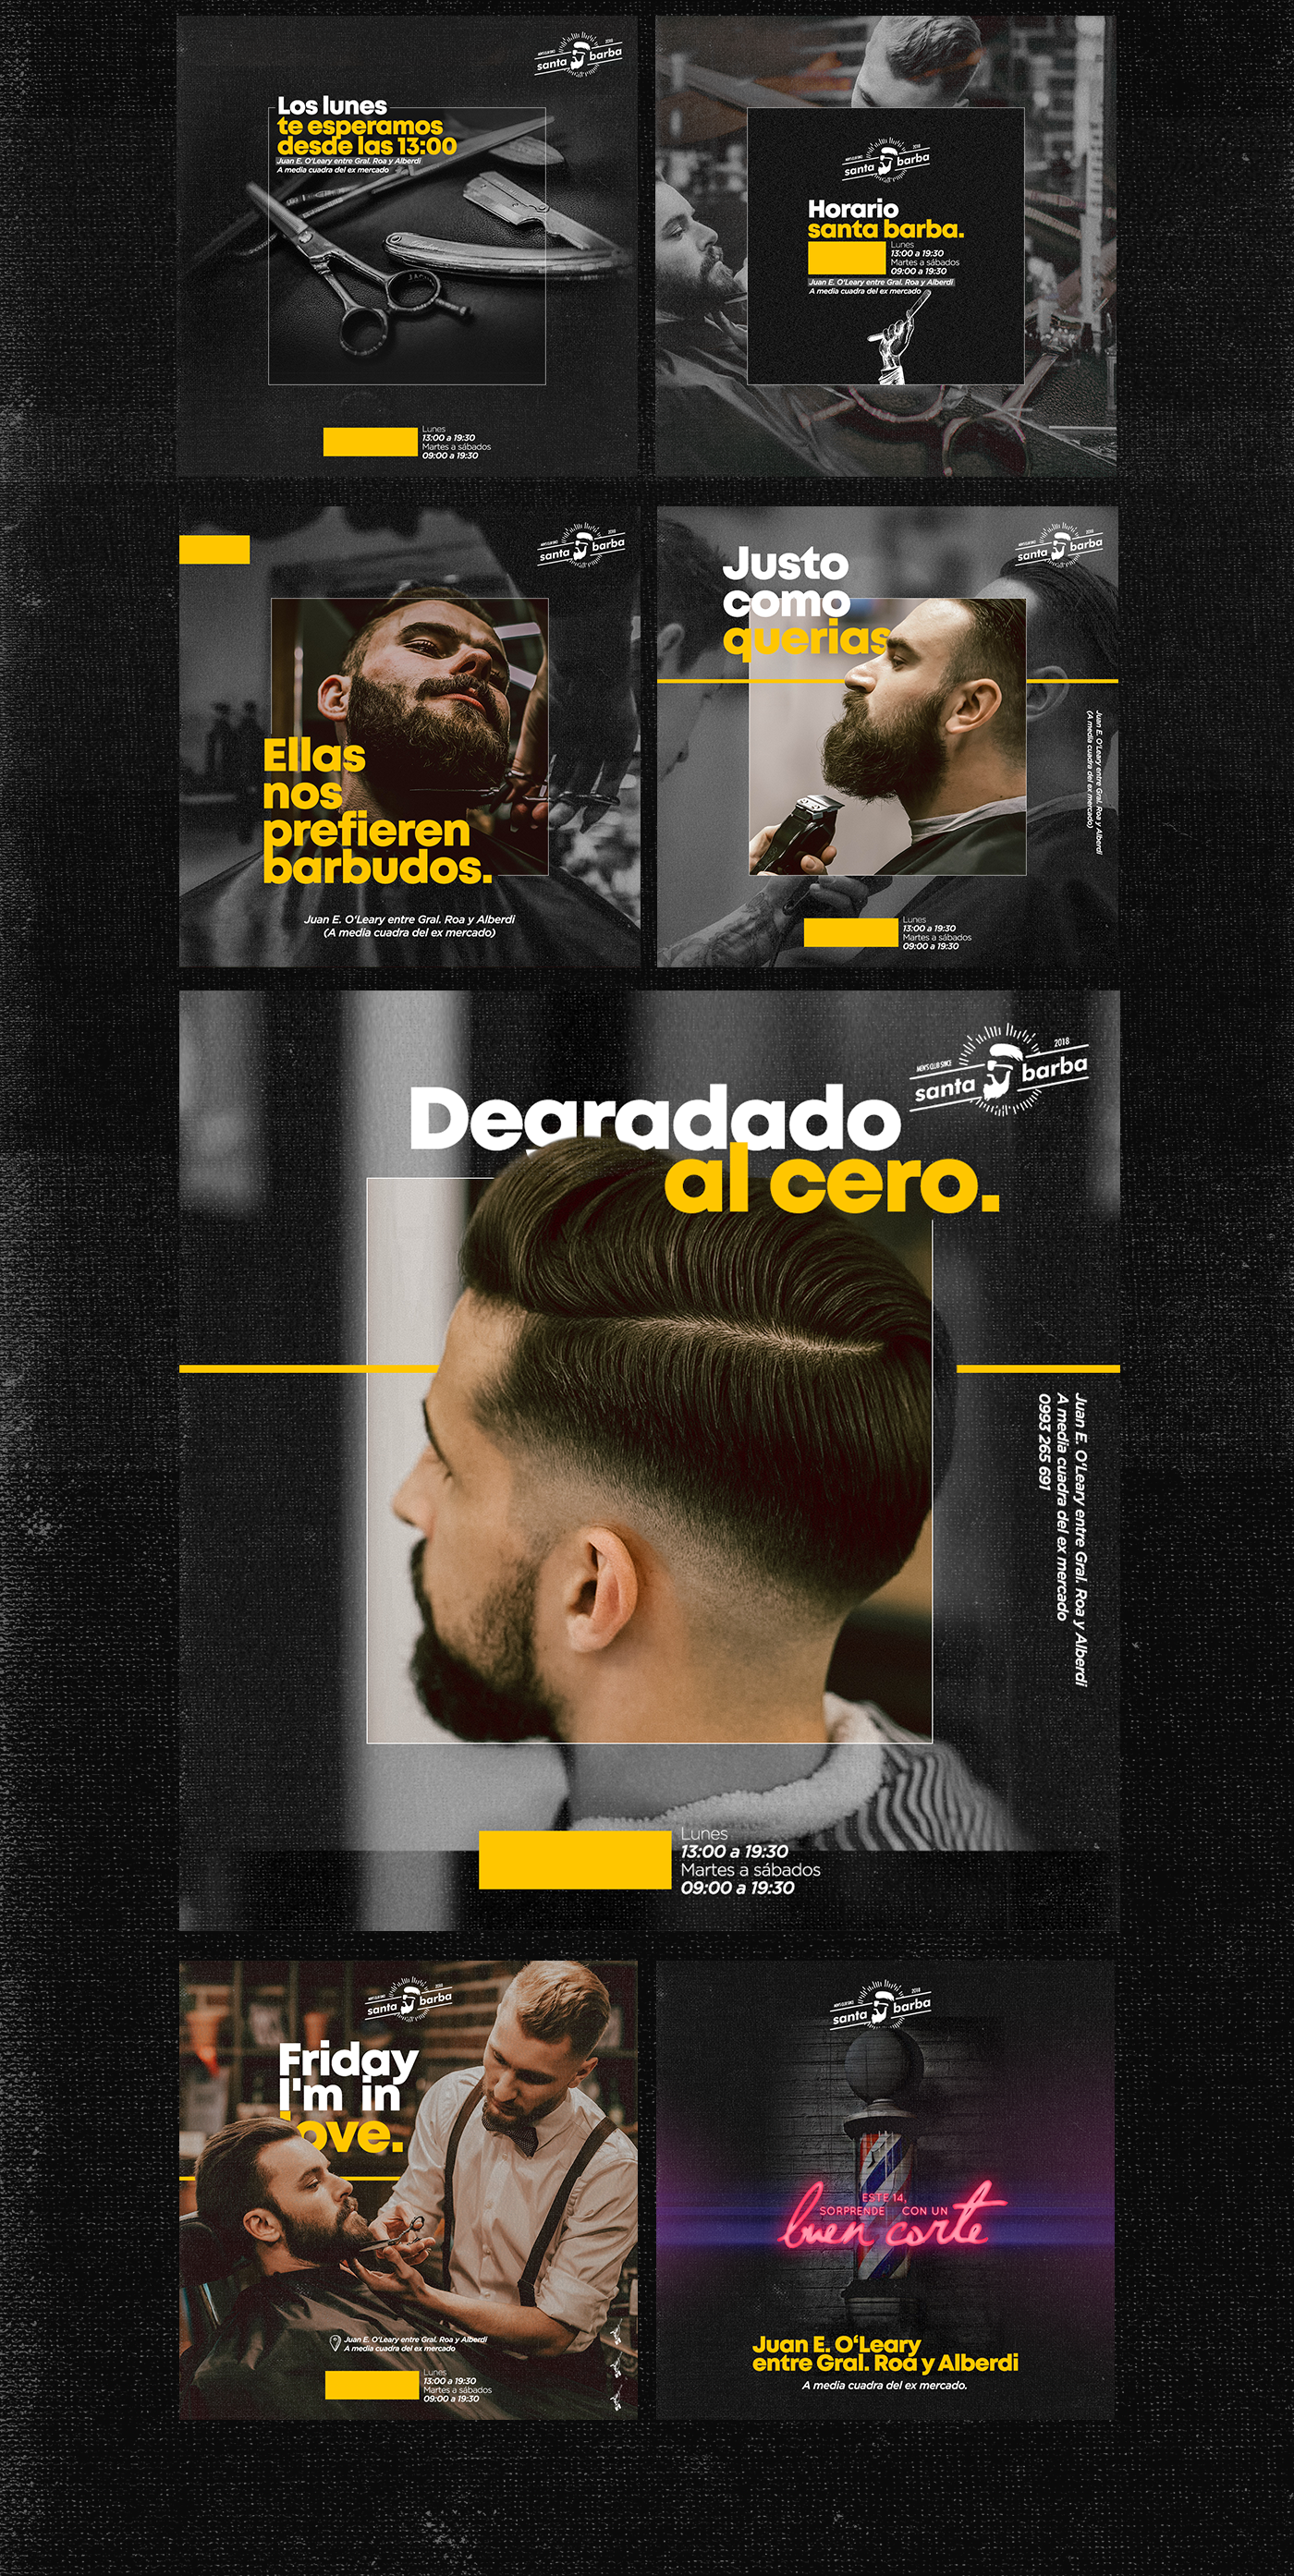 social media barber barberia hair salon men barber shop mídias sociais